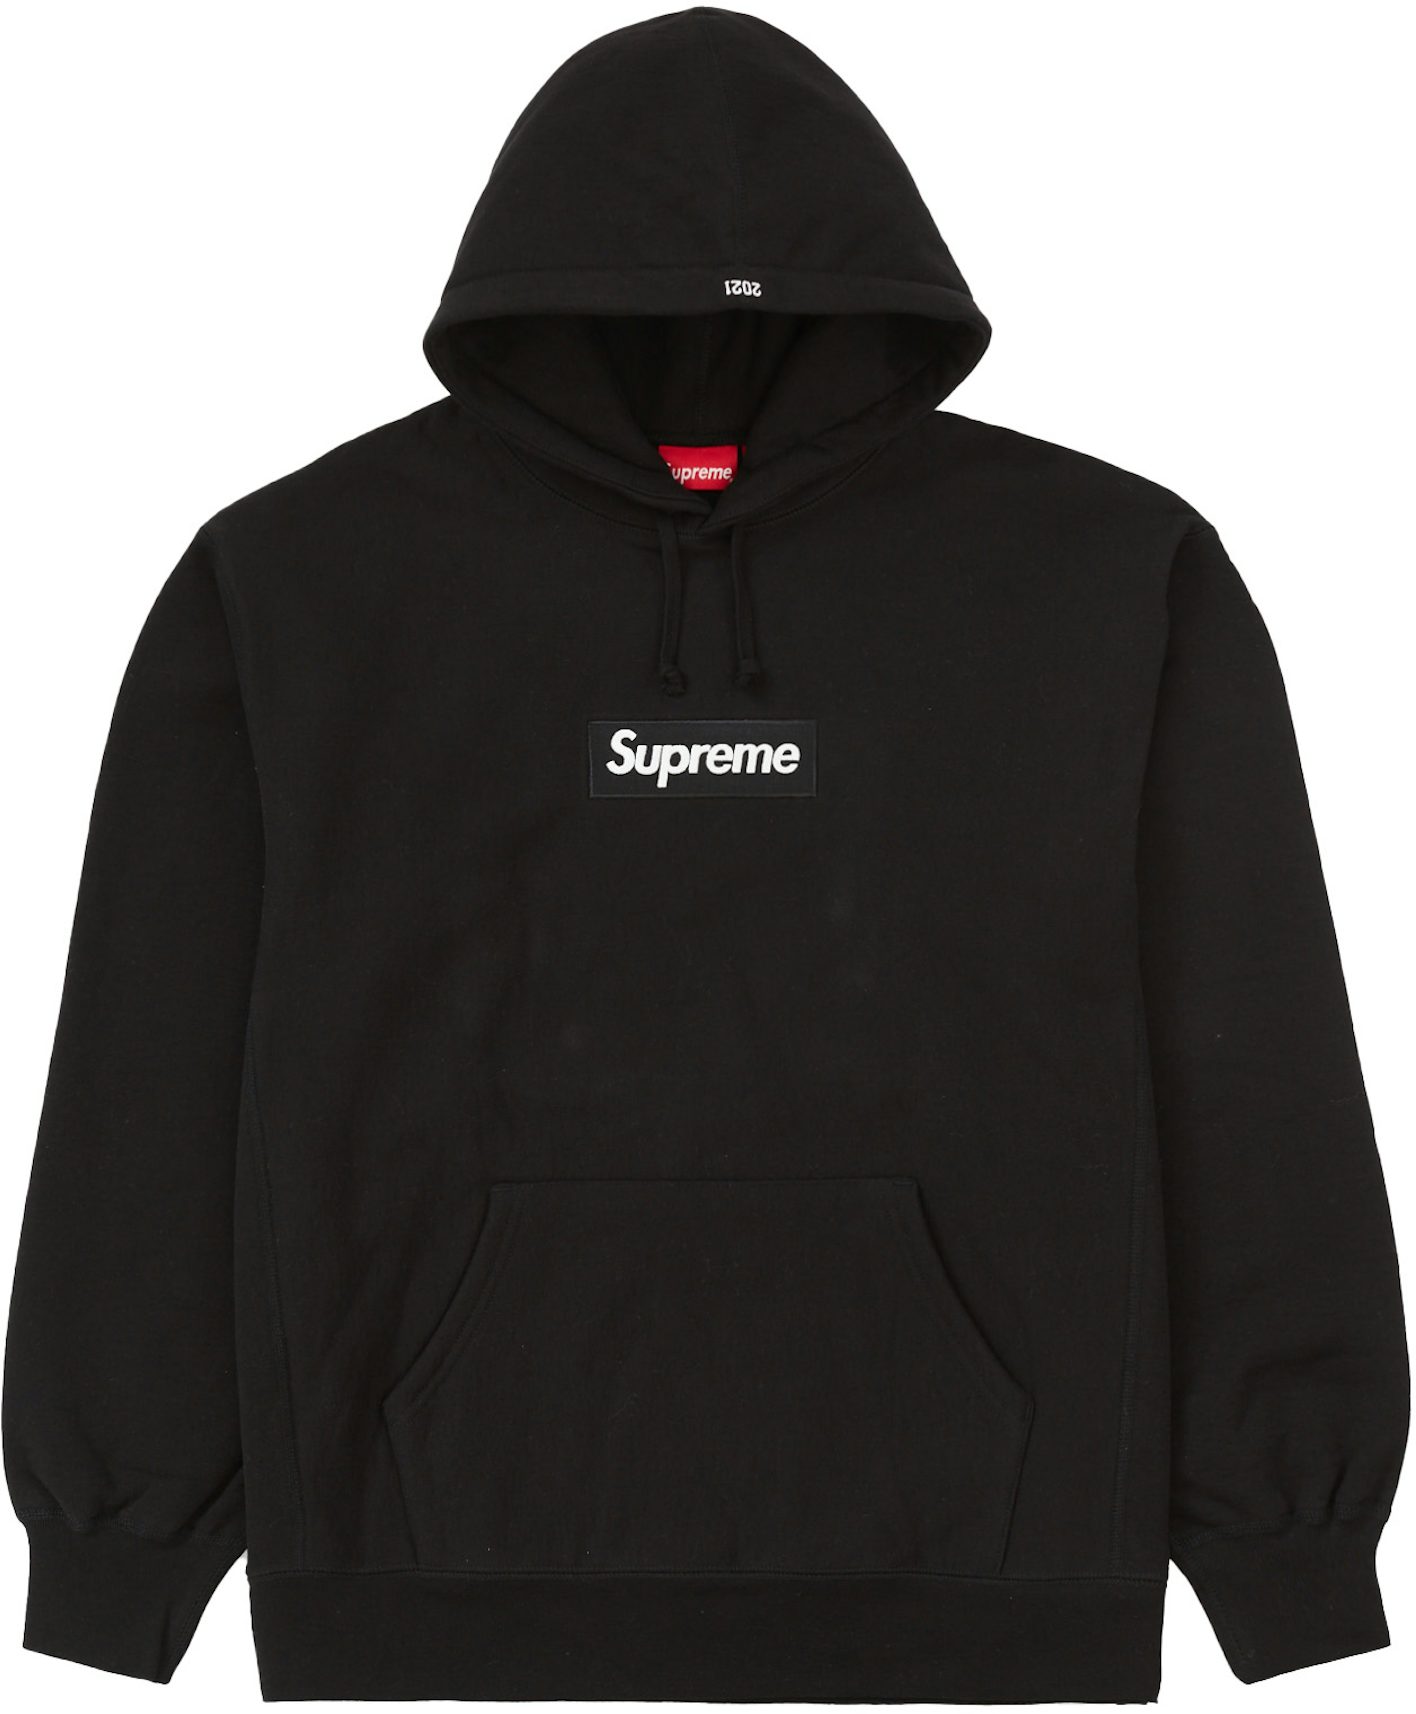 real Supreme x Louis Vuitton Box Logo Hooded Sweatshirt size